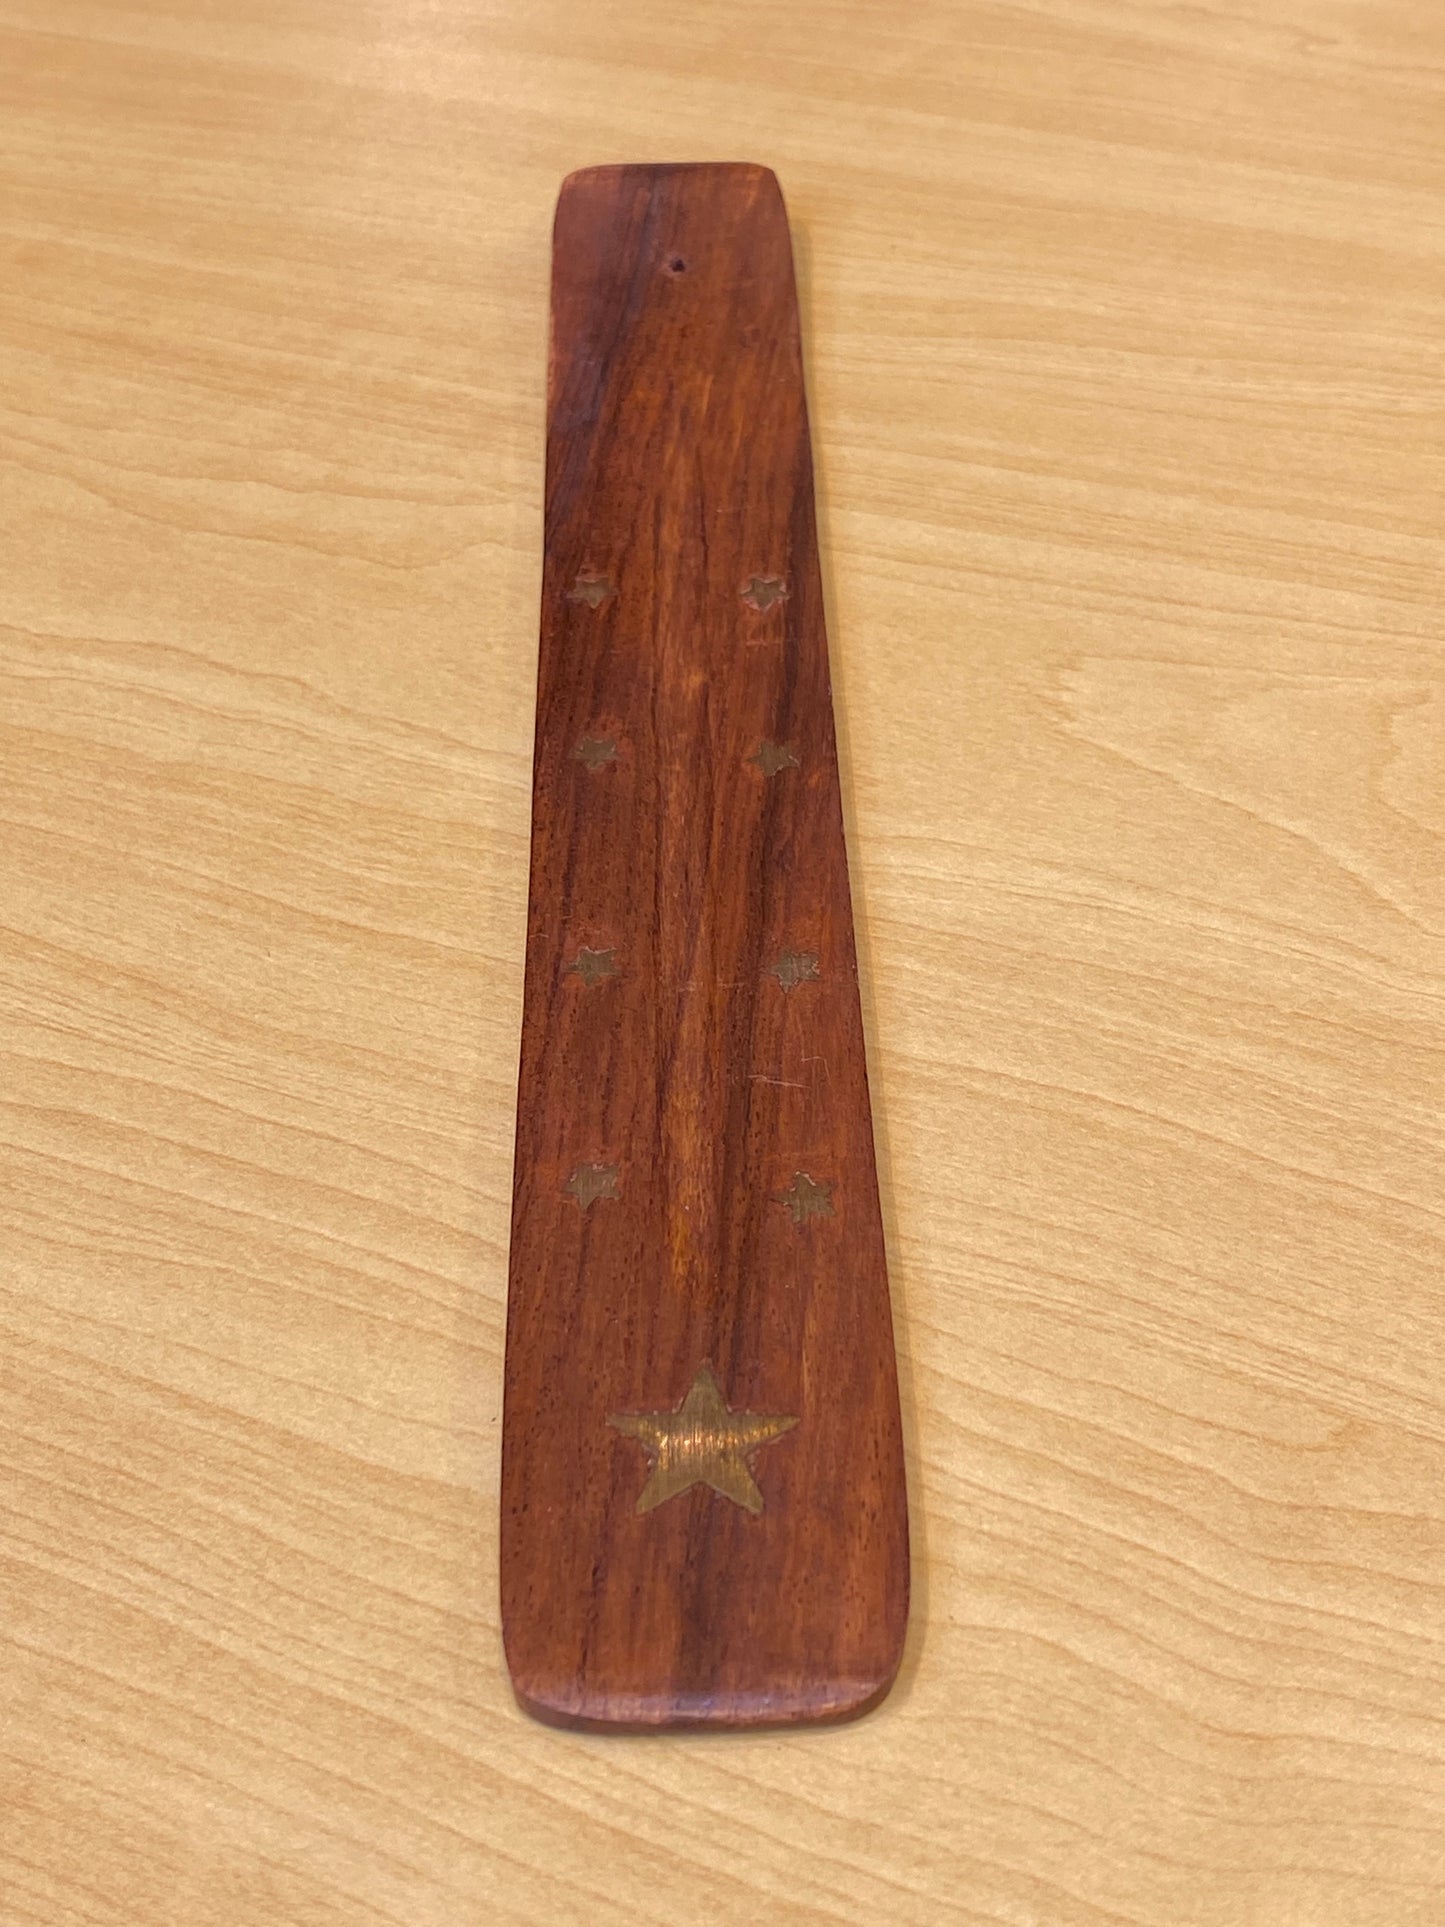 Wooden Ash Catcher Incense Holder Brass Inlay Star with Stars